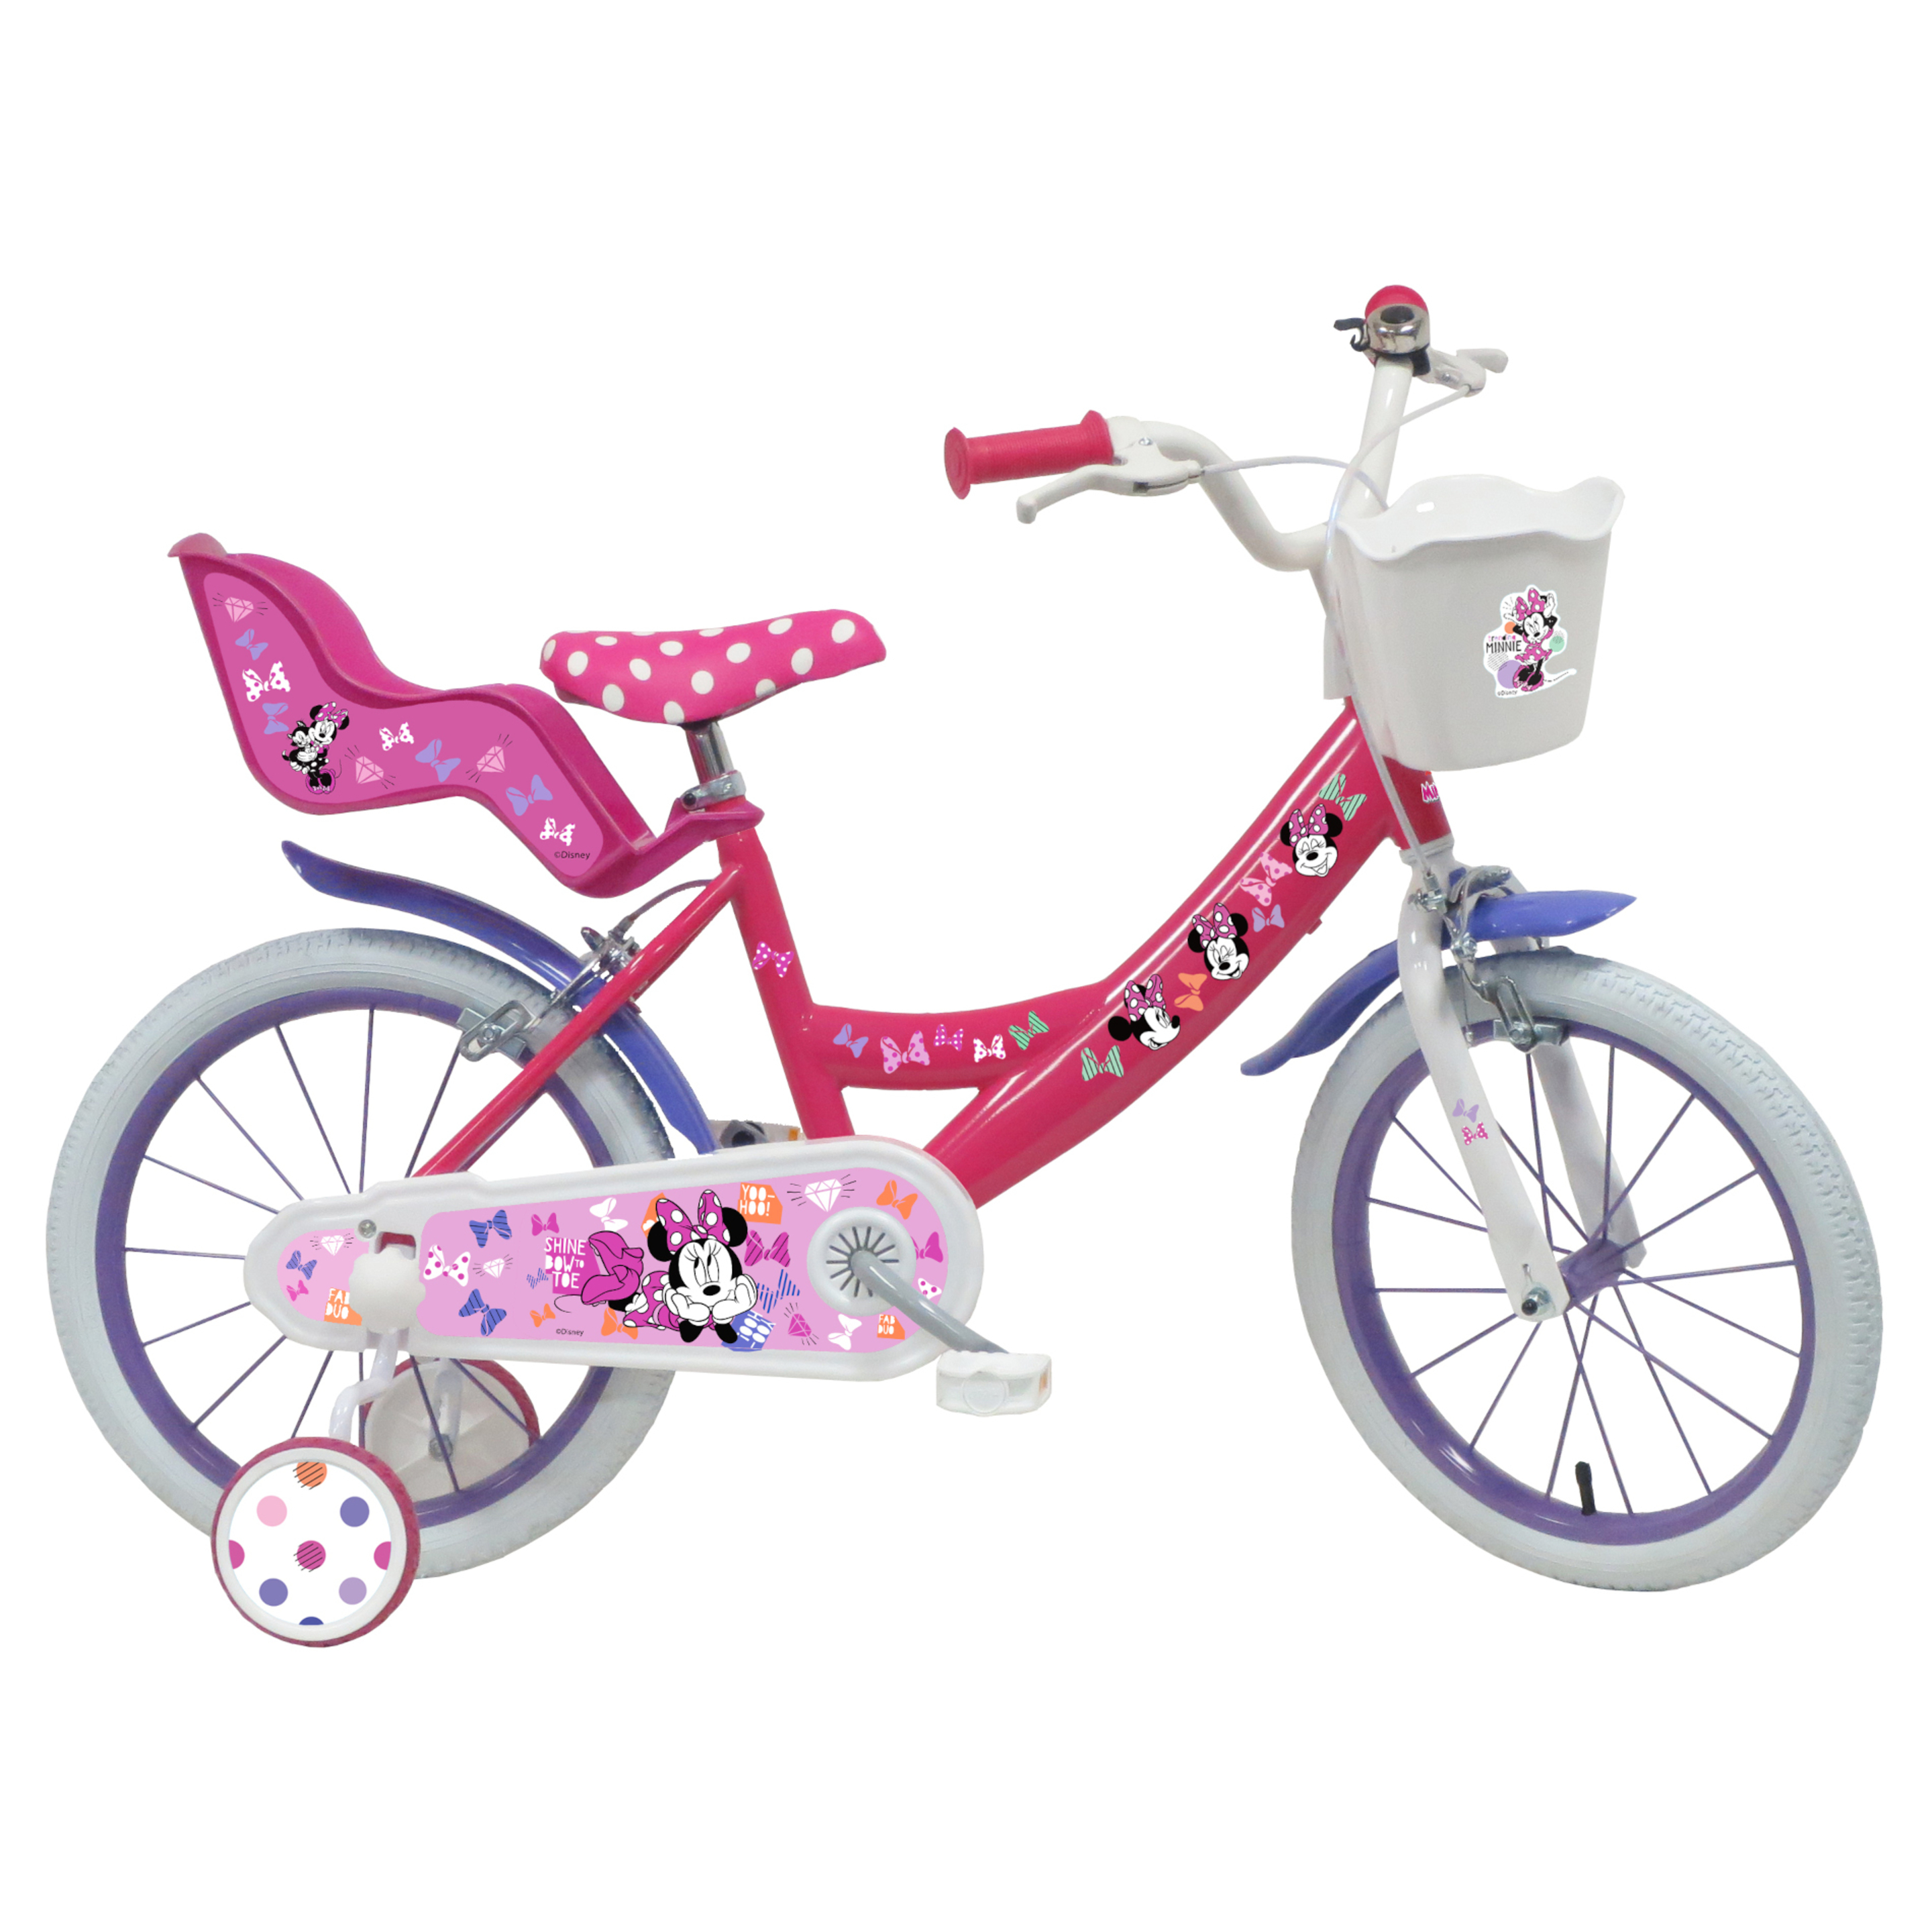 Bicicleta Niña 16 Pulgadas Minnie Mouse 5-7 Años - rosa - 